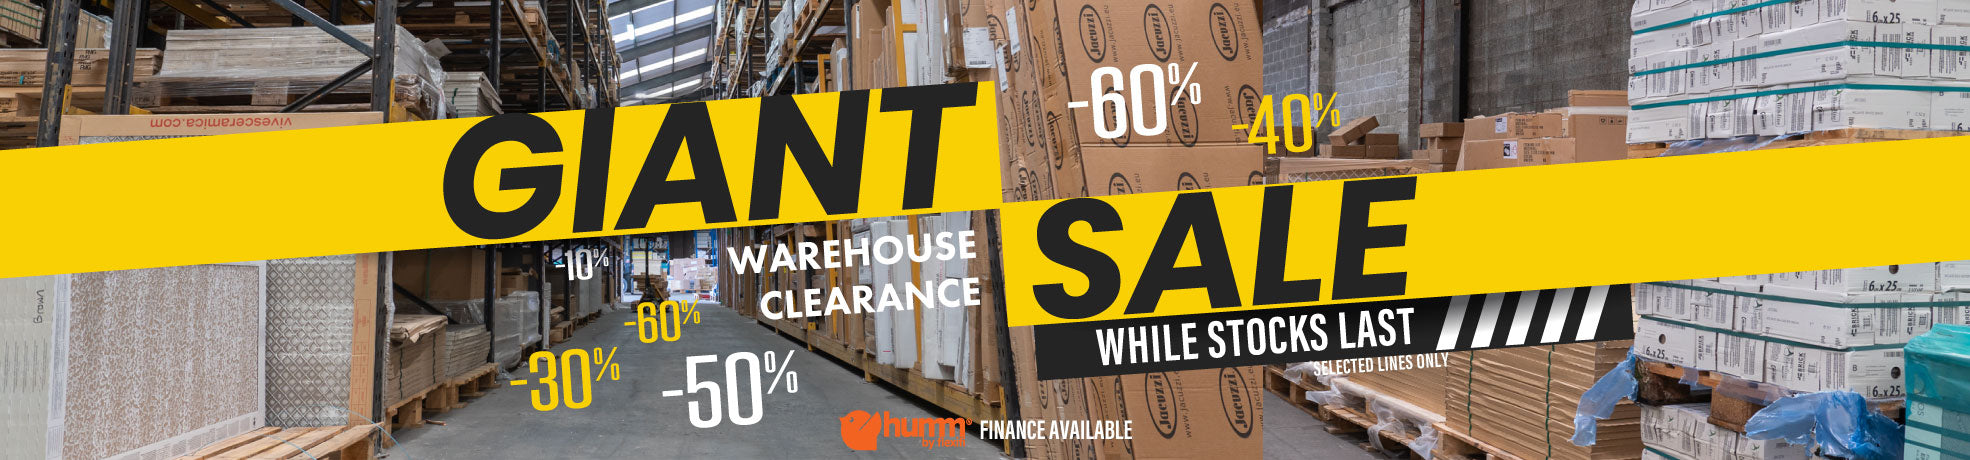 Massive Warehouse Clearance Sale